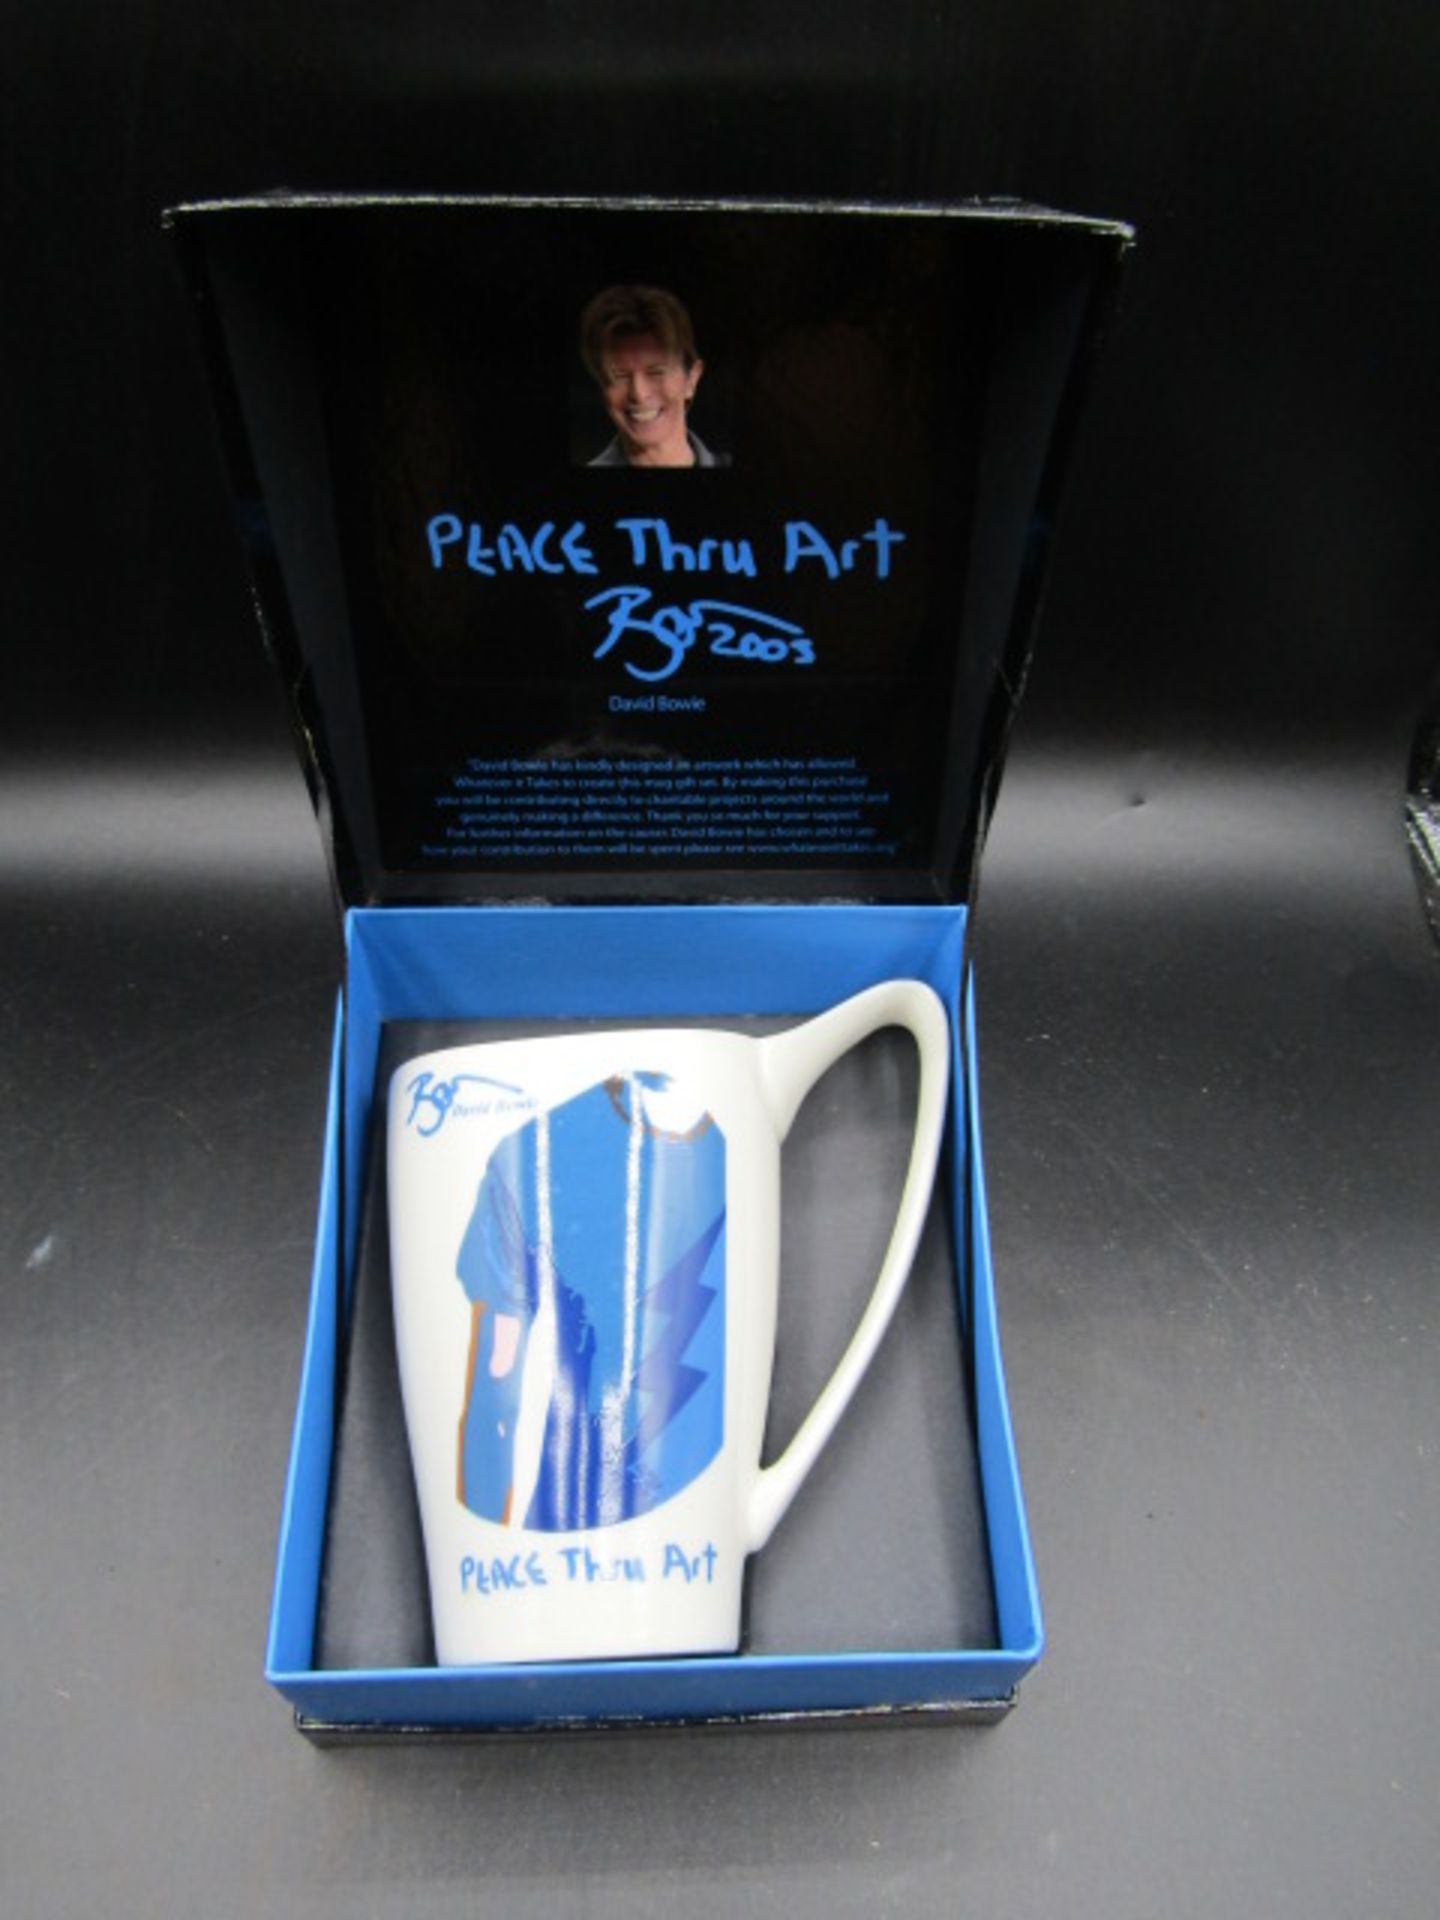 David Bowie 'Peace through Art' ltd edition mug in box